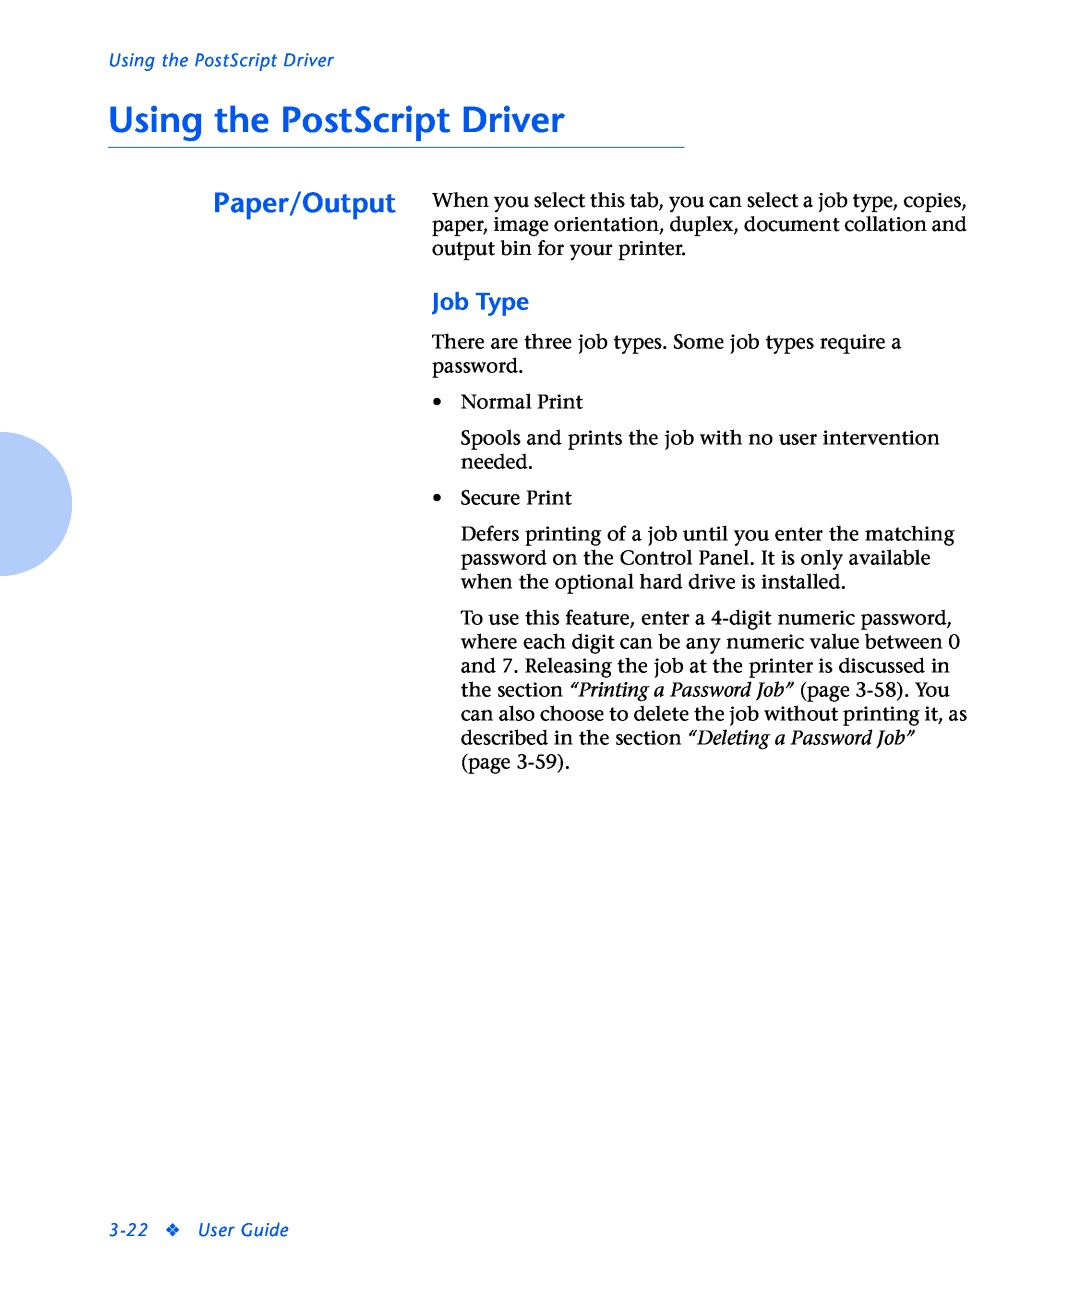 Xerox N2125 manual Using the PostScript Driver, Job Type, User Guide 